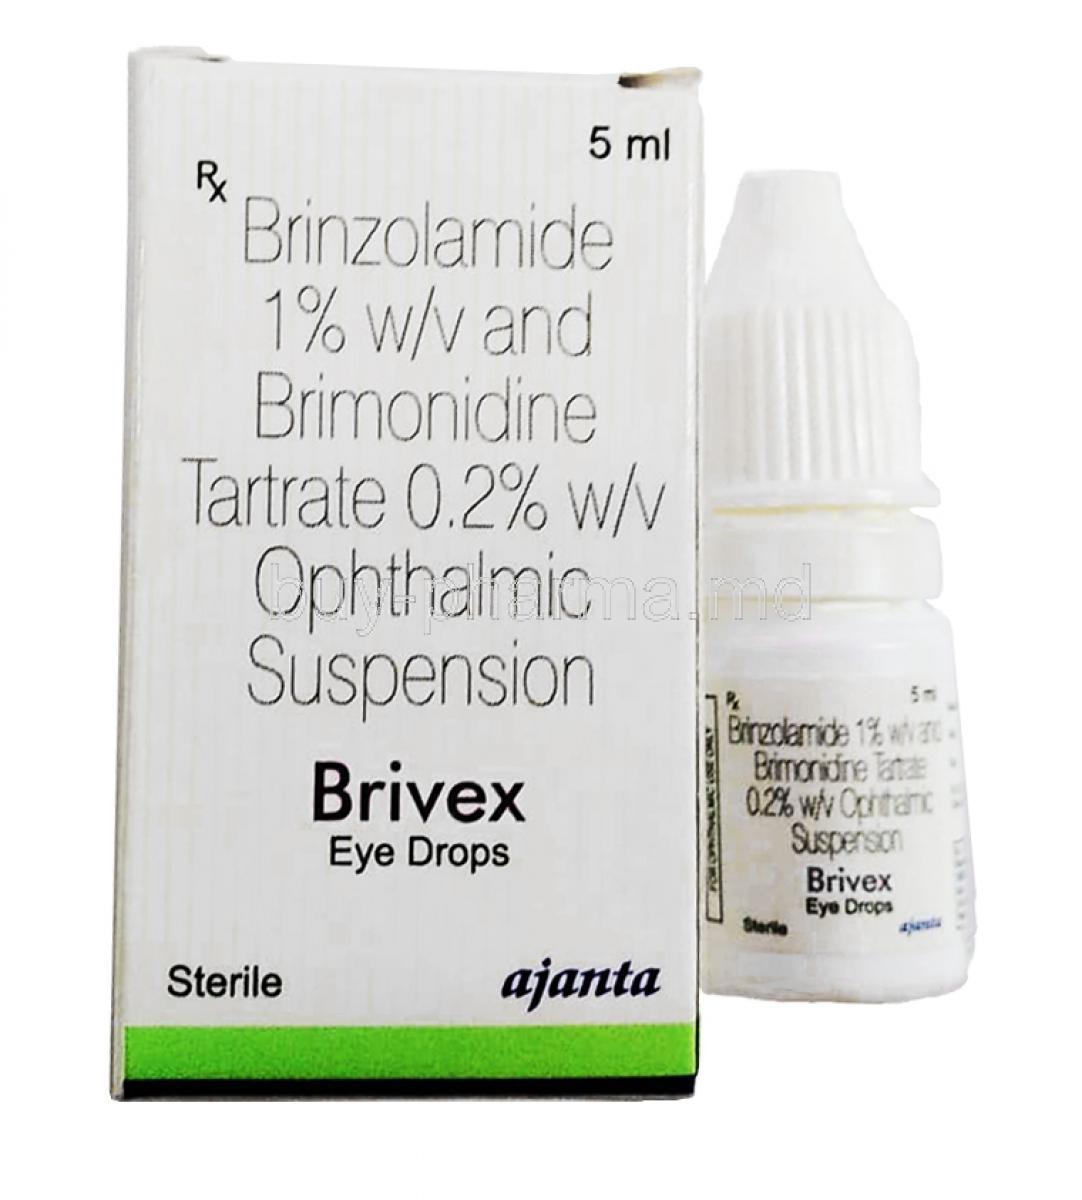 Brivex Eye Drop, Brinzolamide 1%, Brimonidine 0.2%, box, bottle